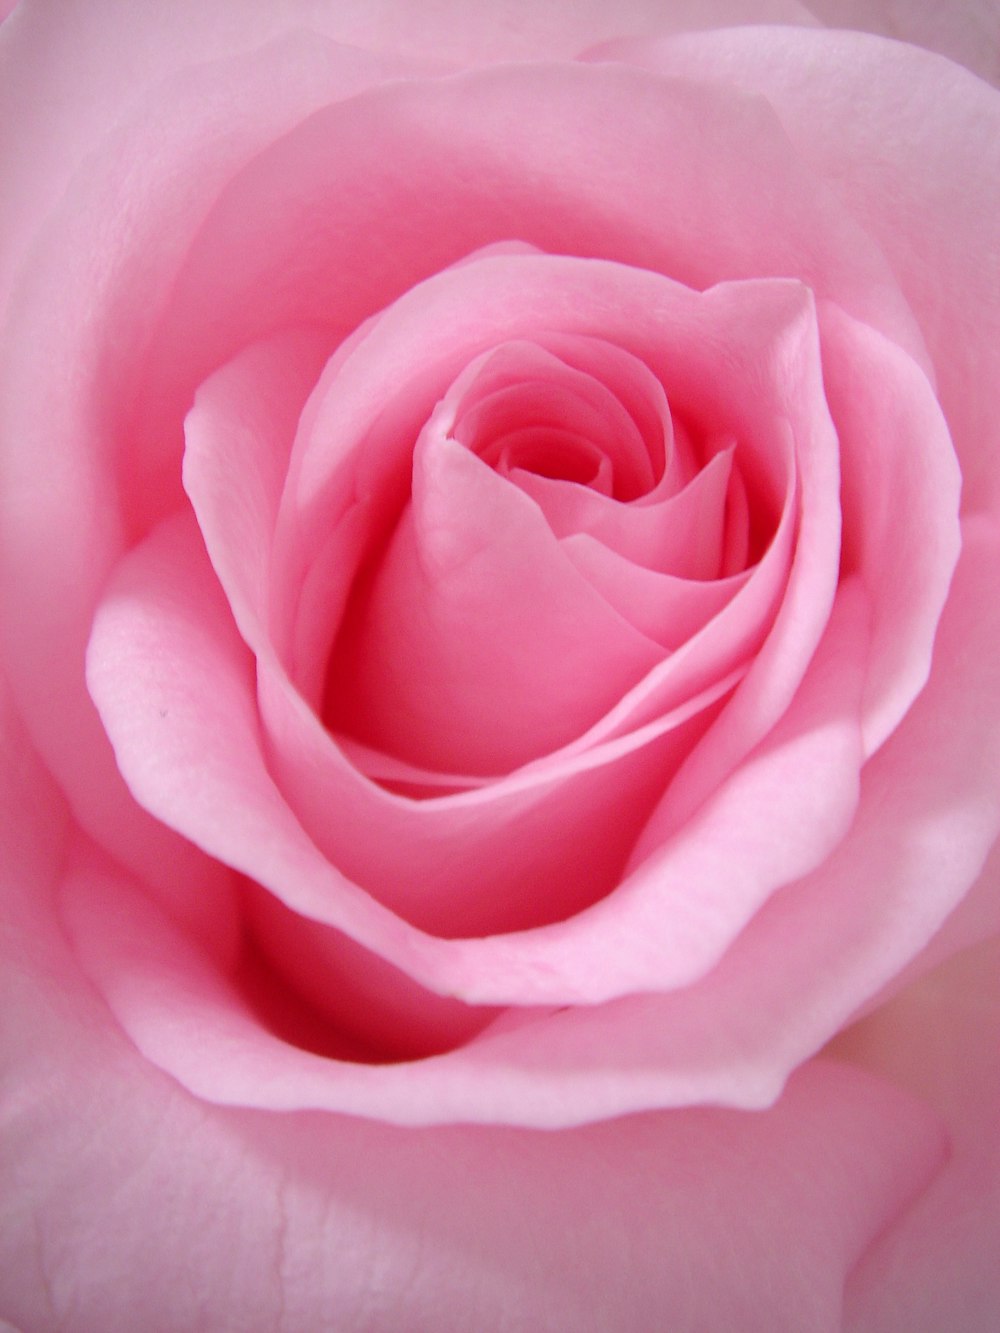 Gros plan photo de rose rose